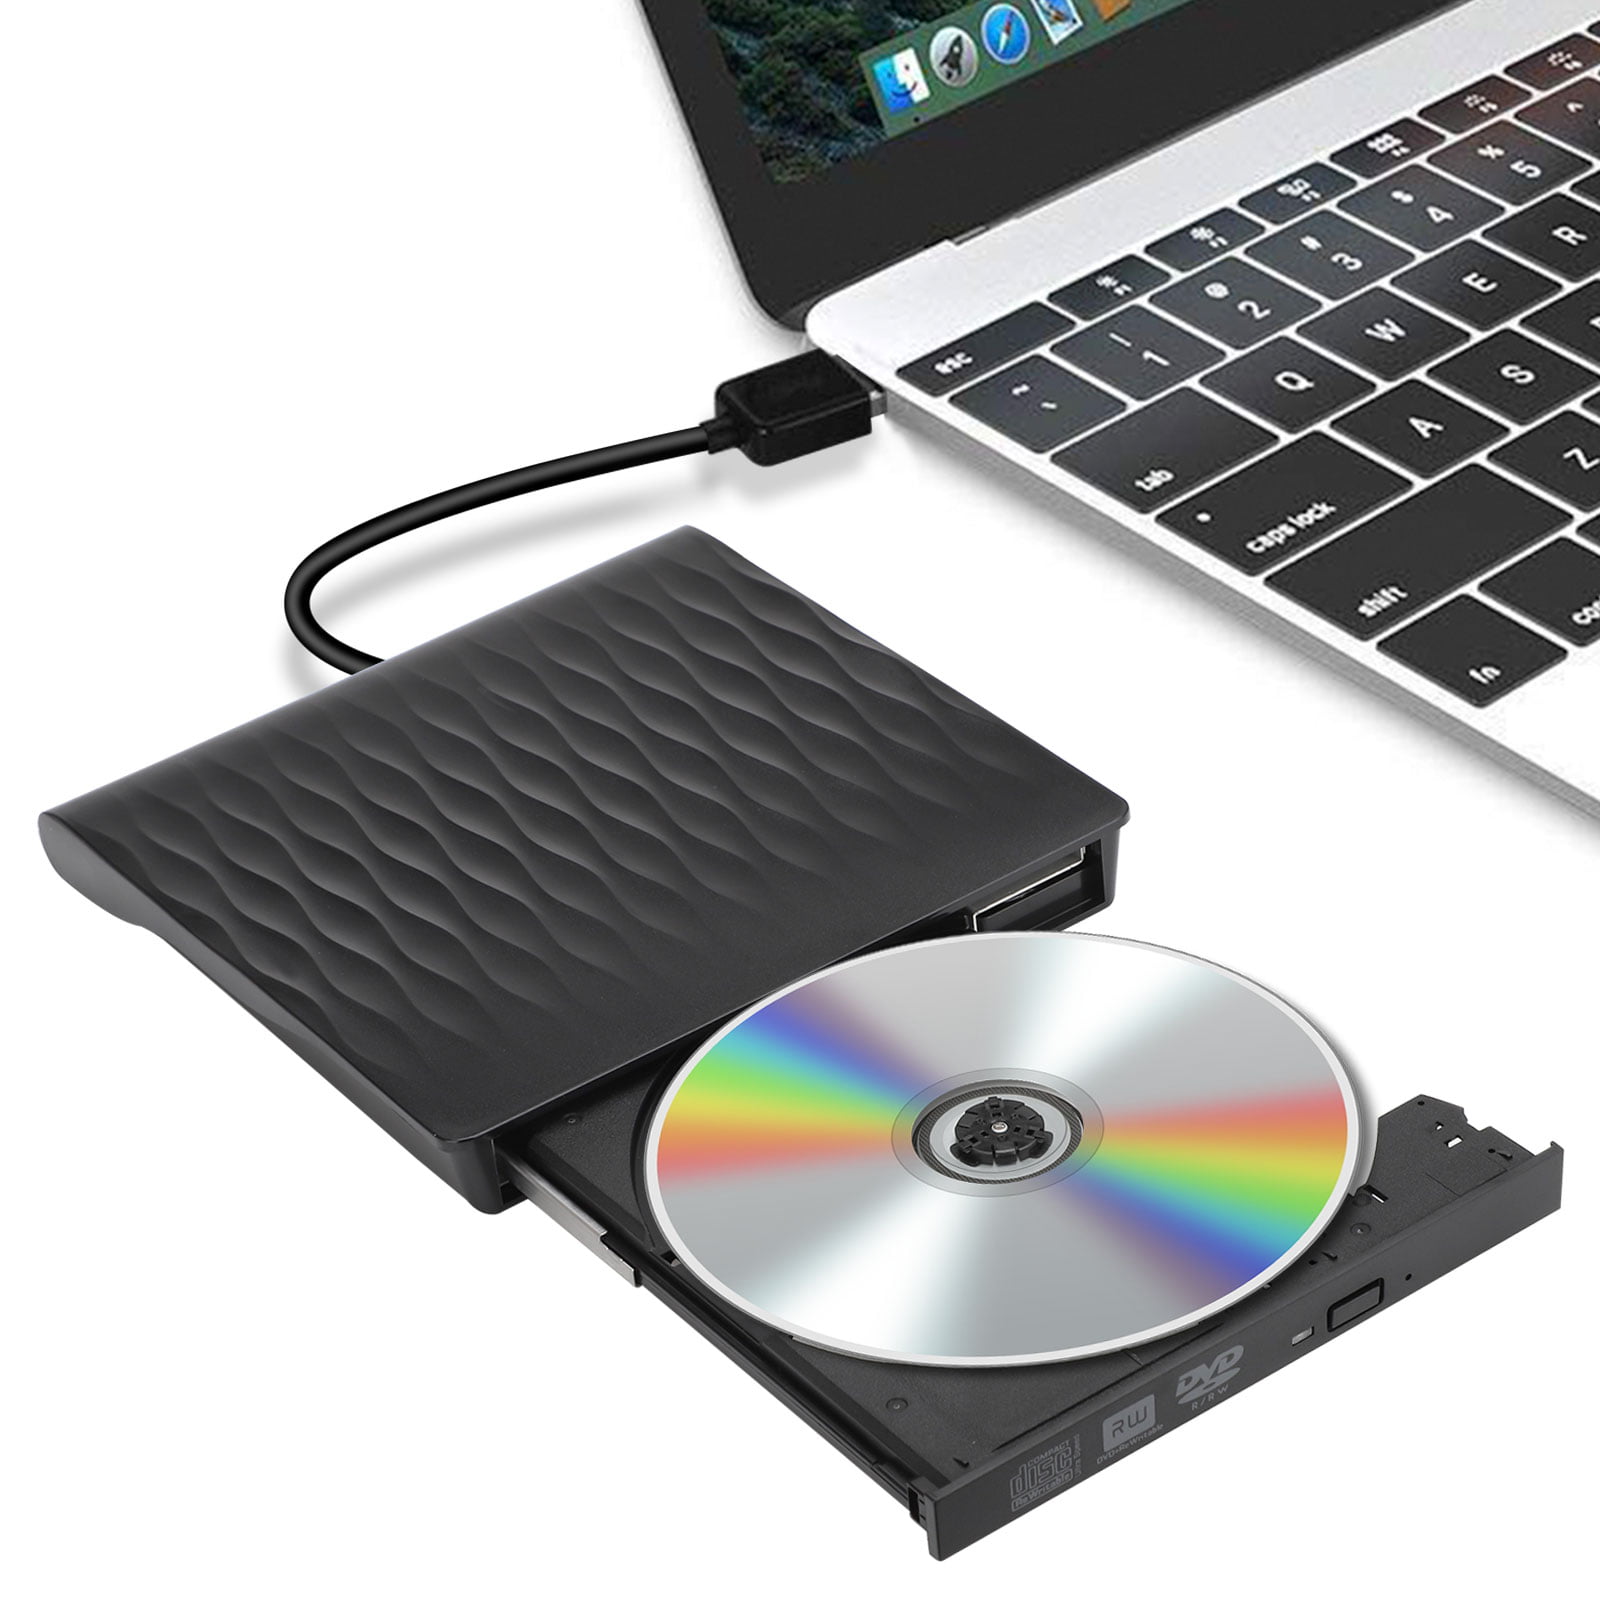 Ноутбук компакт. USB DVD RW. DVD, CD, USB. Оптический диск PNG.